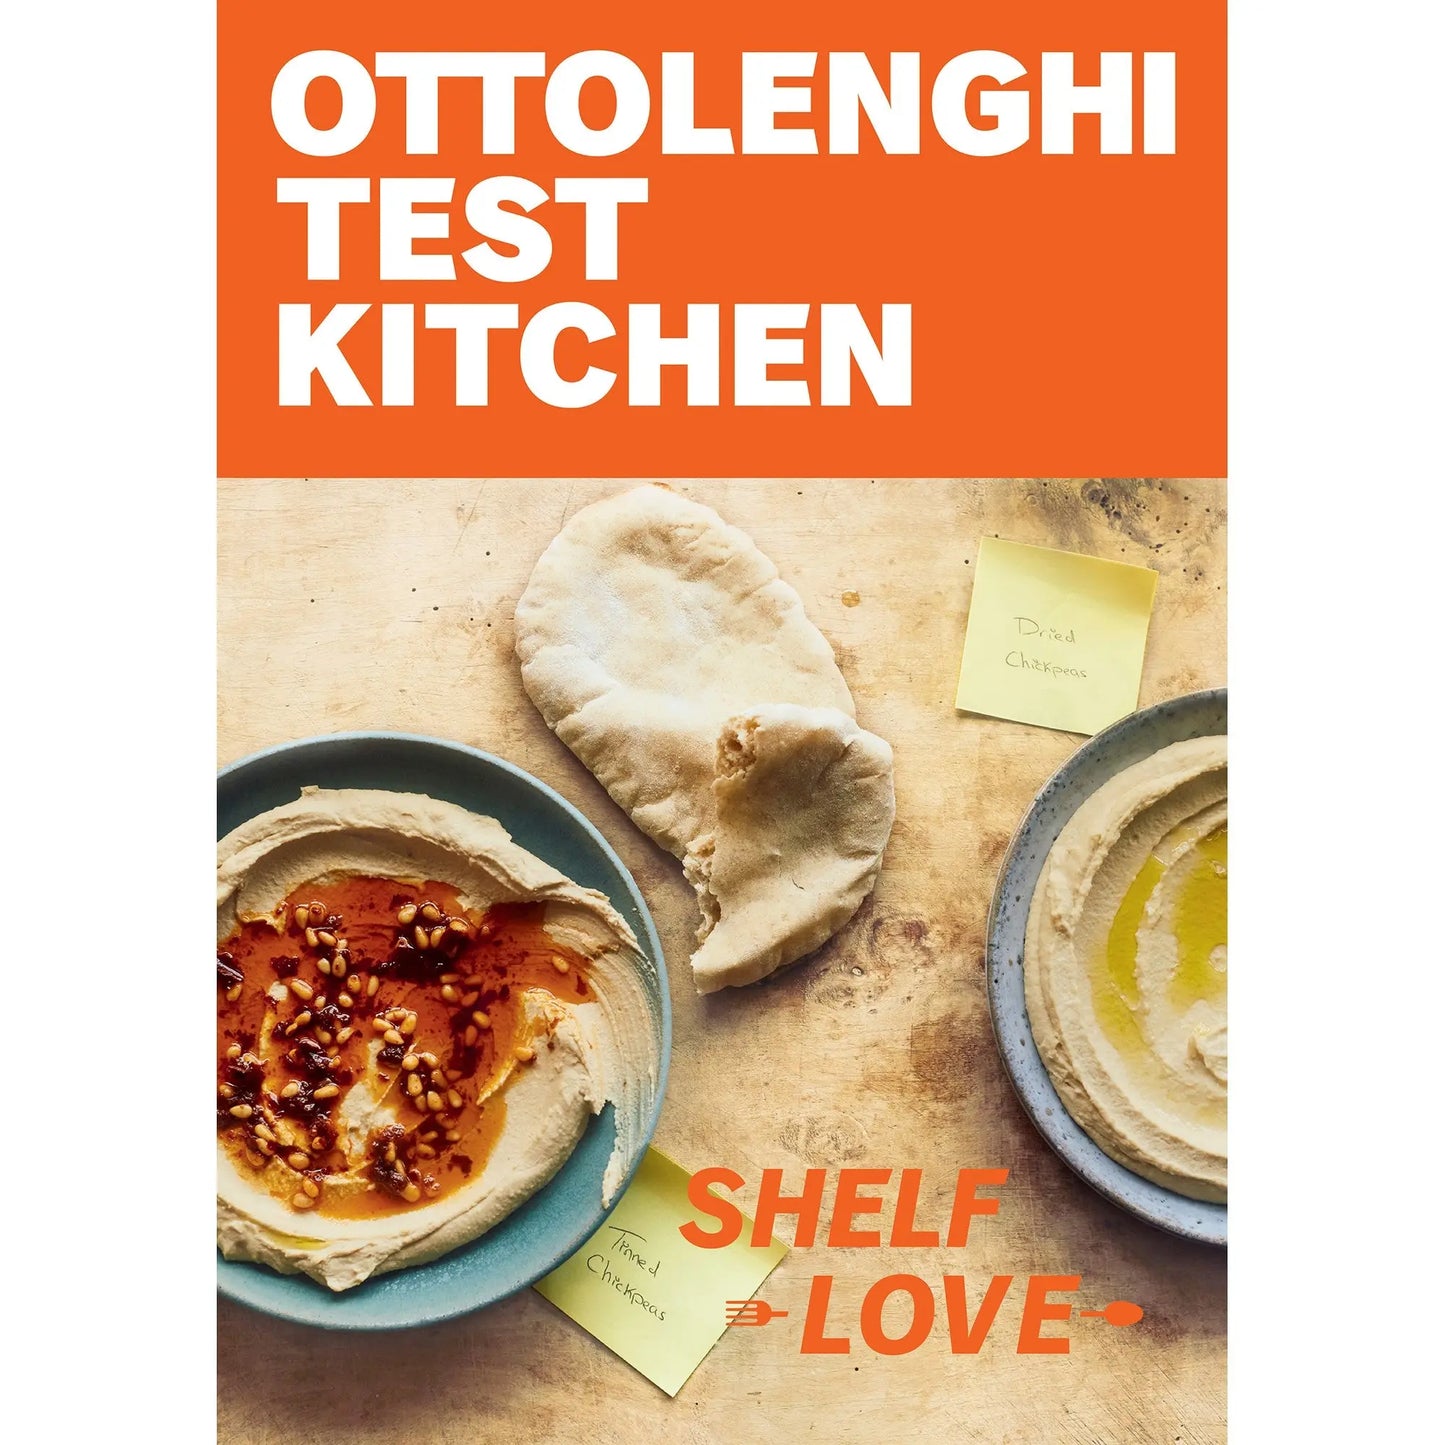 Ottolenghi Test kitchen: Shelf Love PENGUIN HOUSE